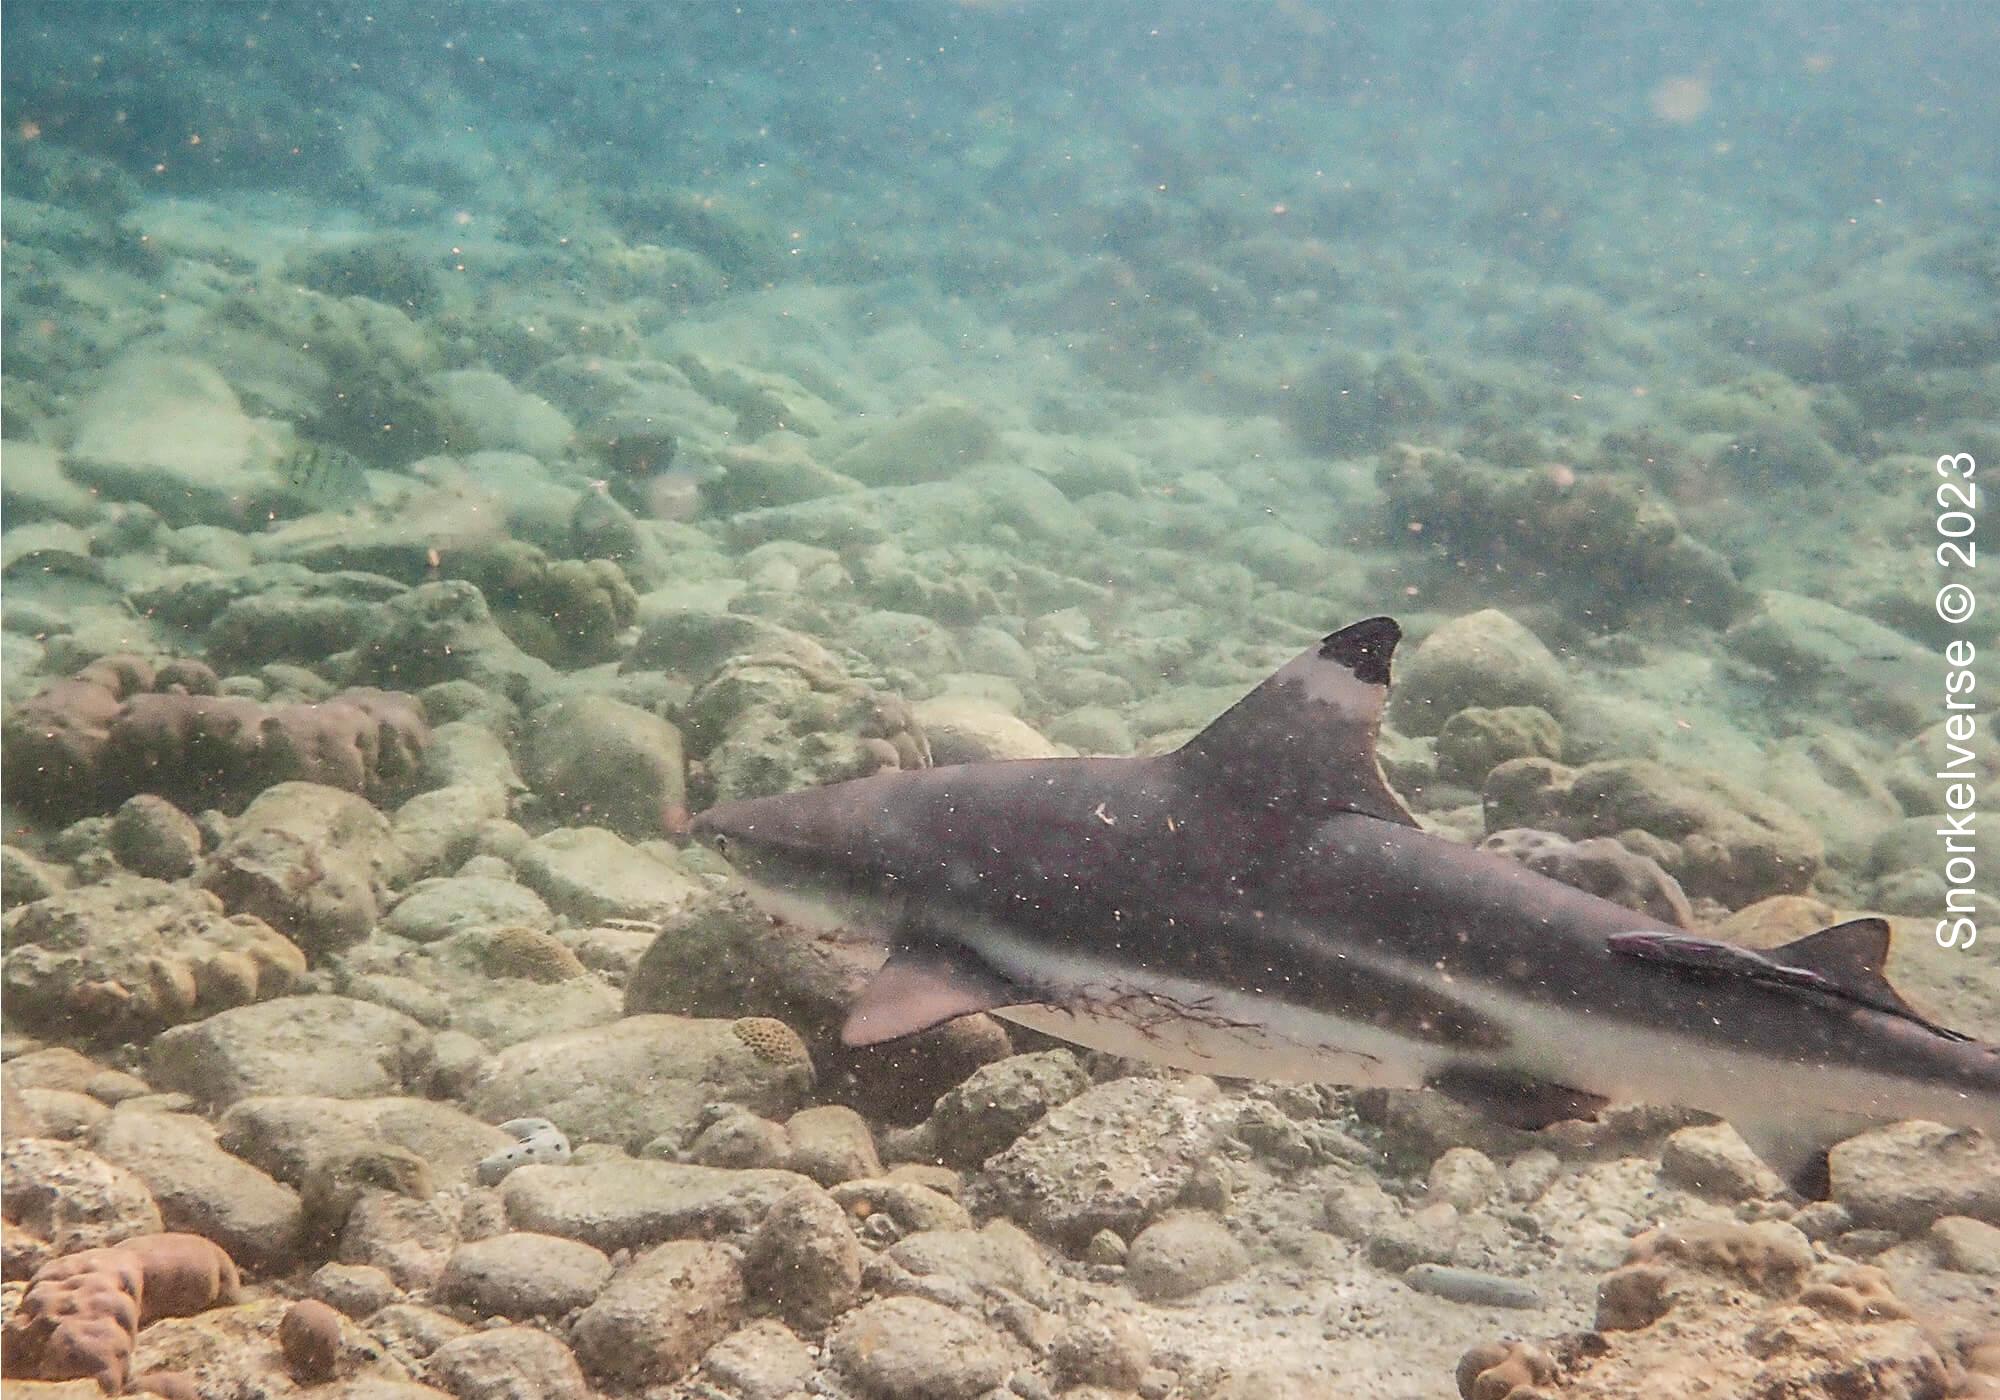 Juvenile Blacktip Reef Shark, Shark Point, Phi Phi Islands, Thailand